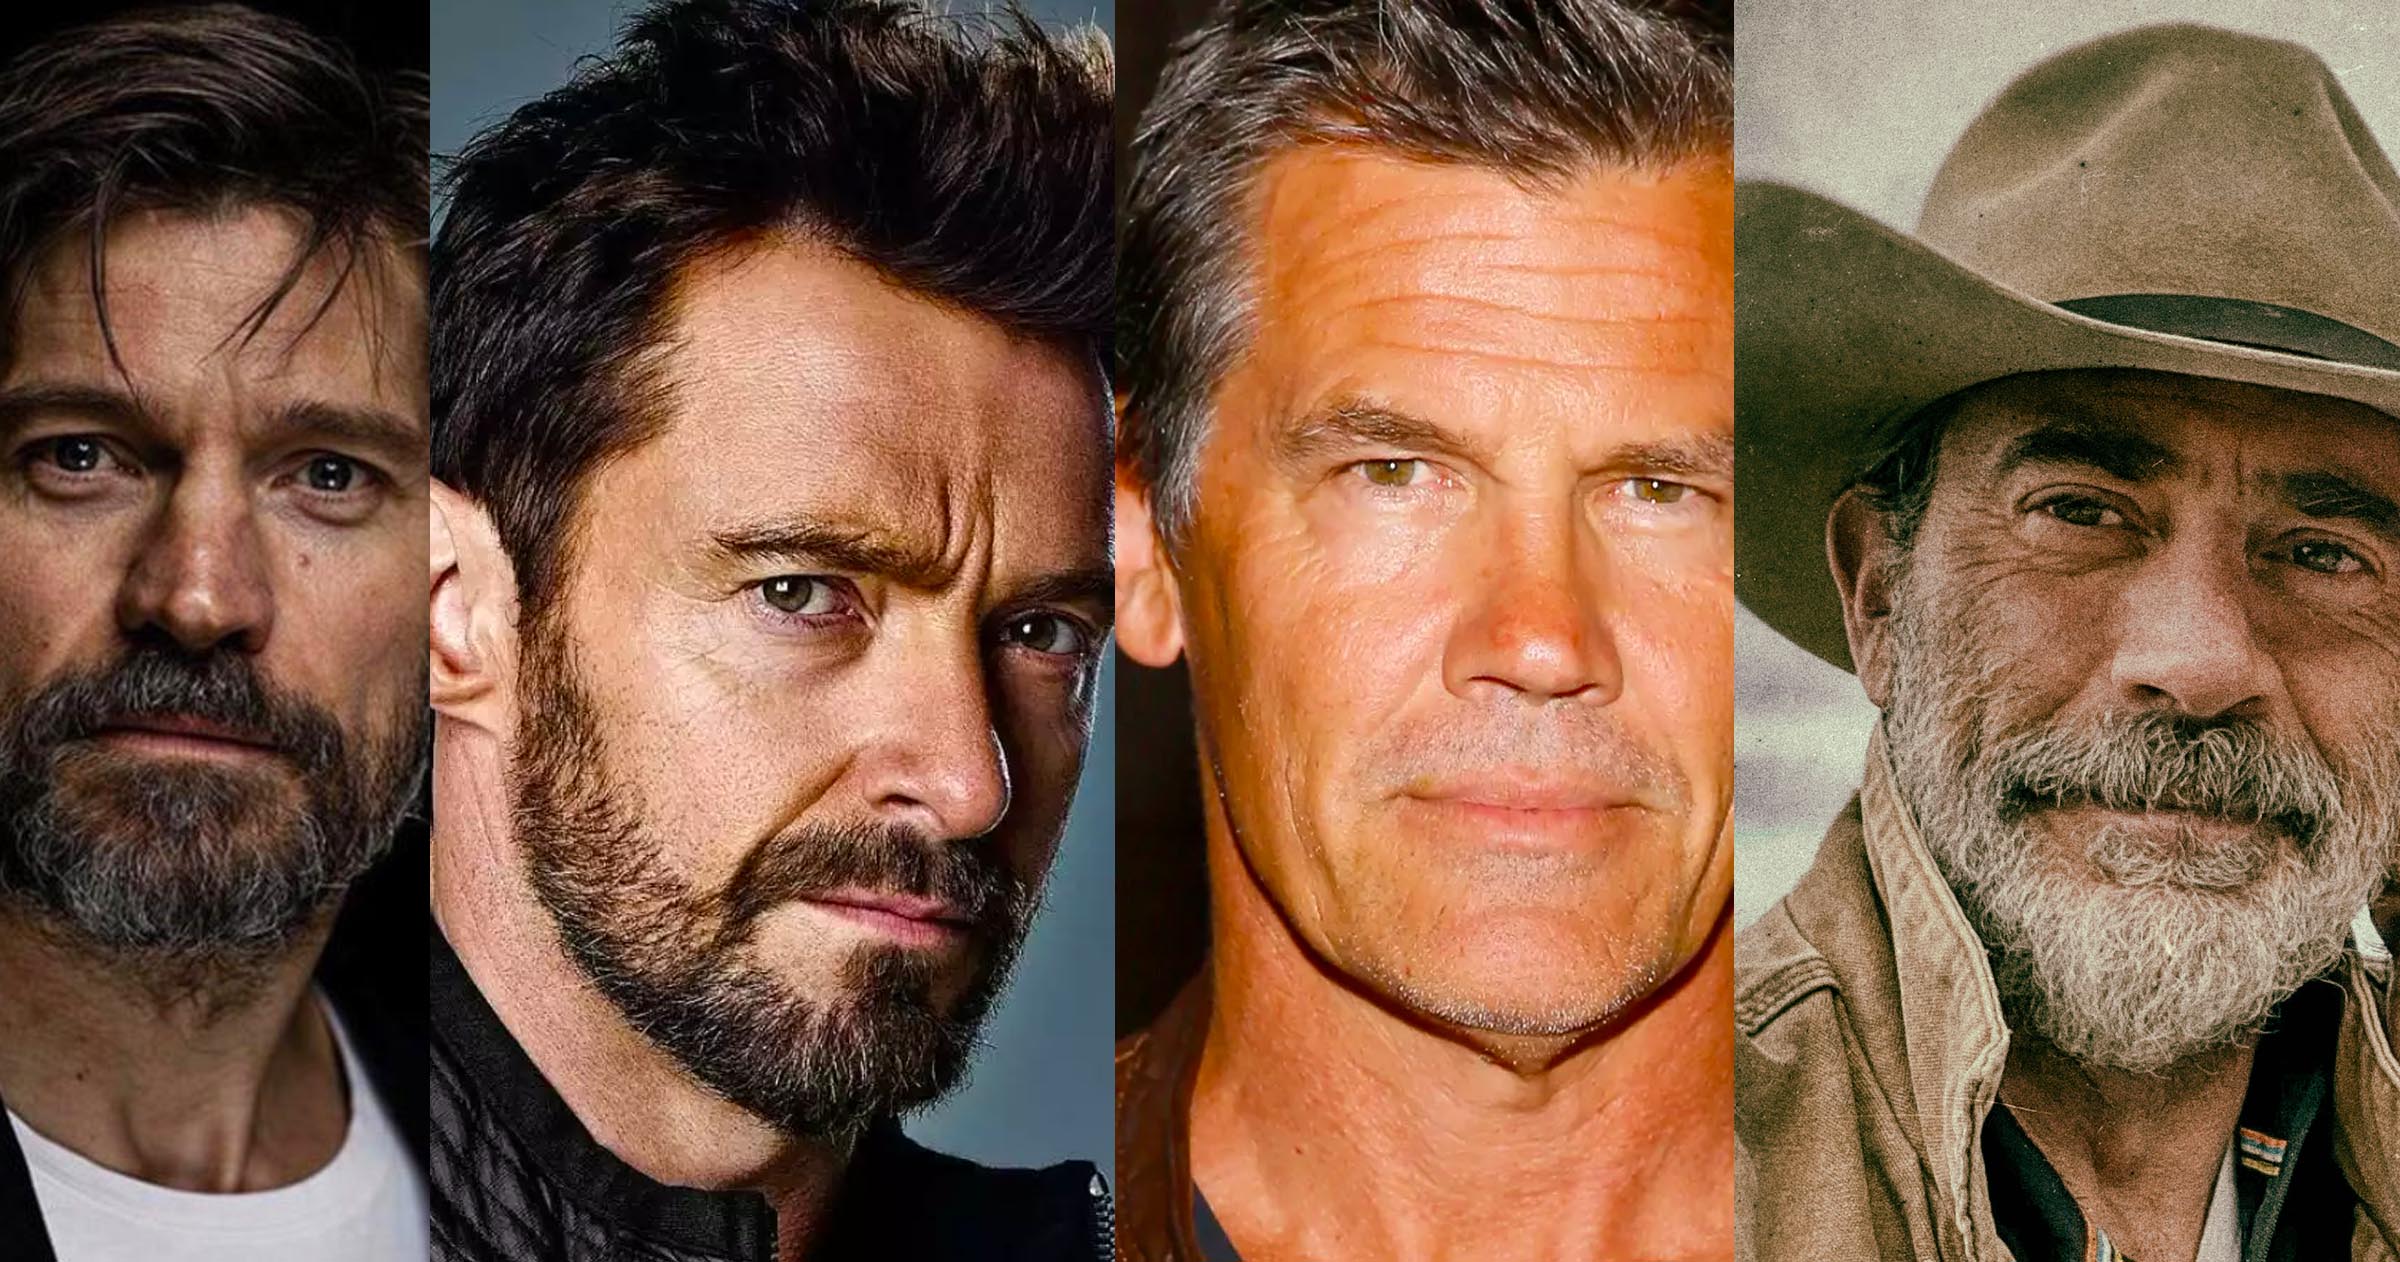 The Last of Us: 10 atores que podem interpretar Joel na série da HBO